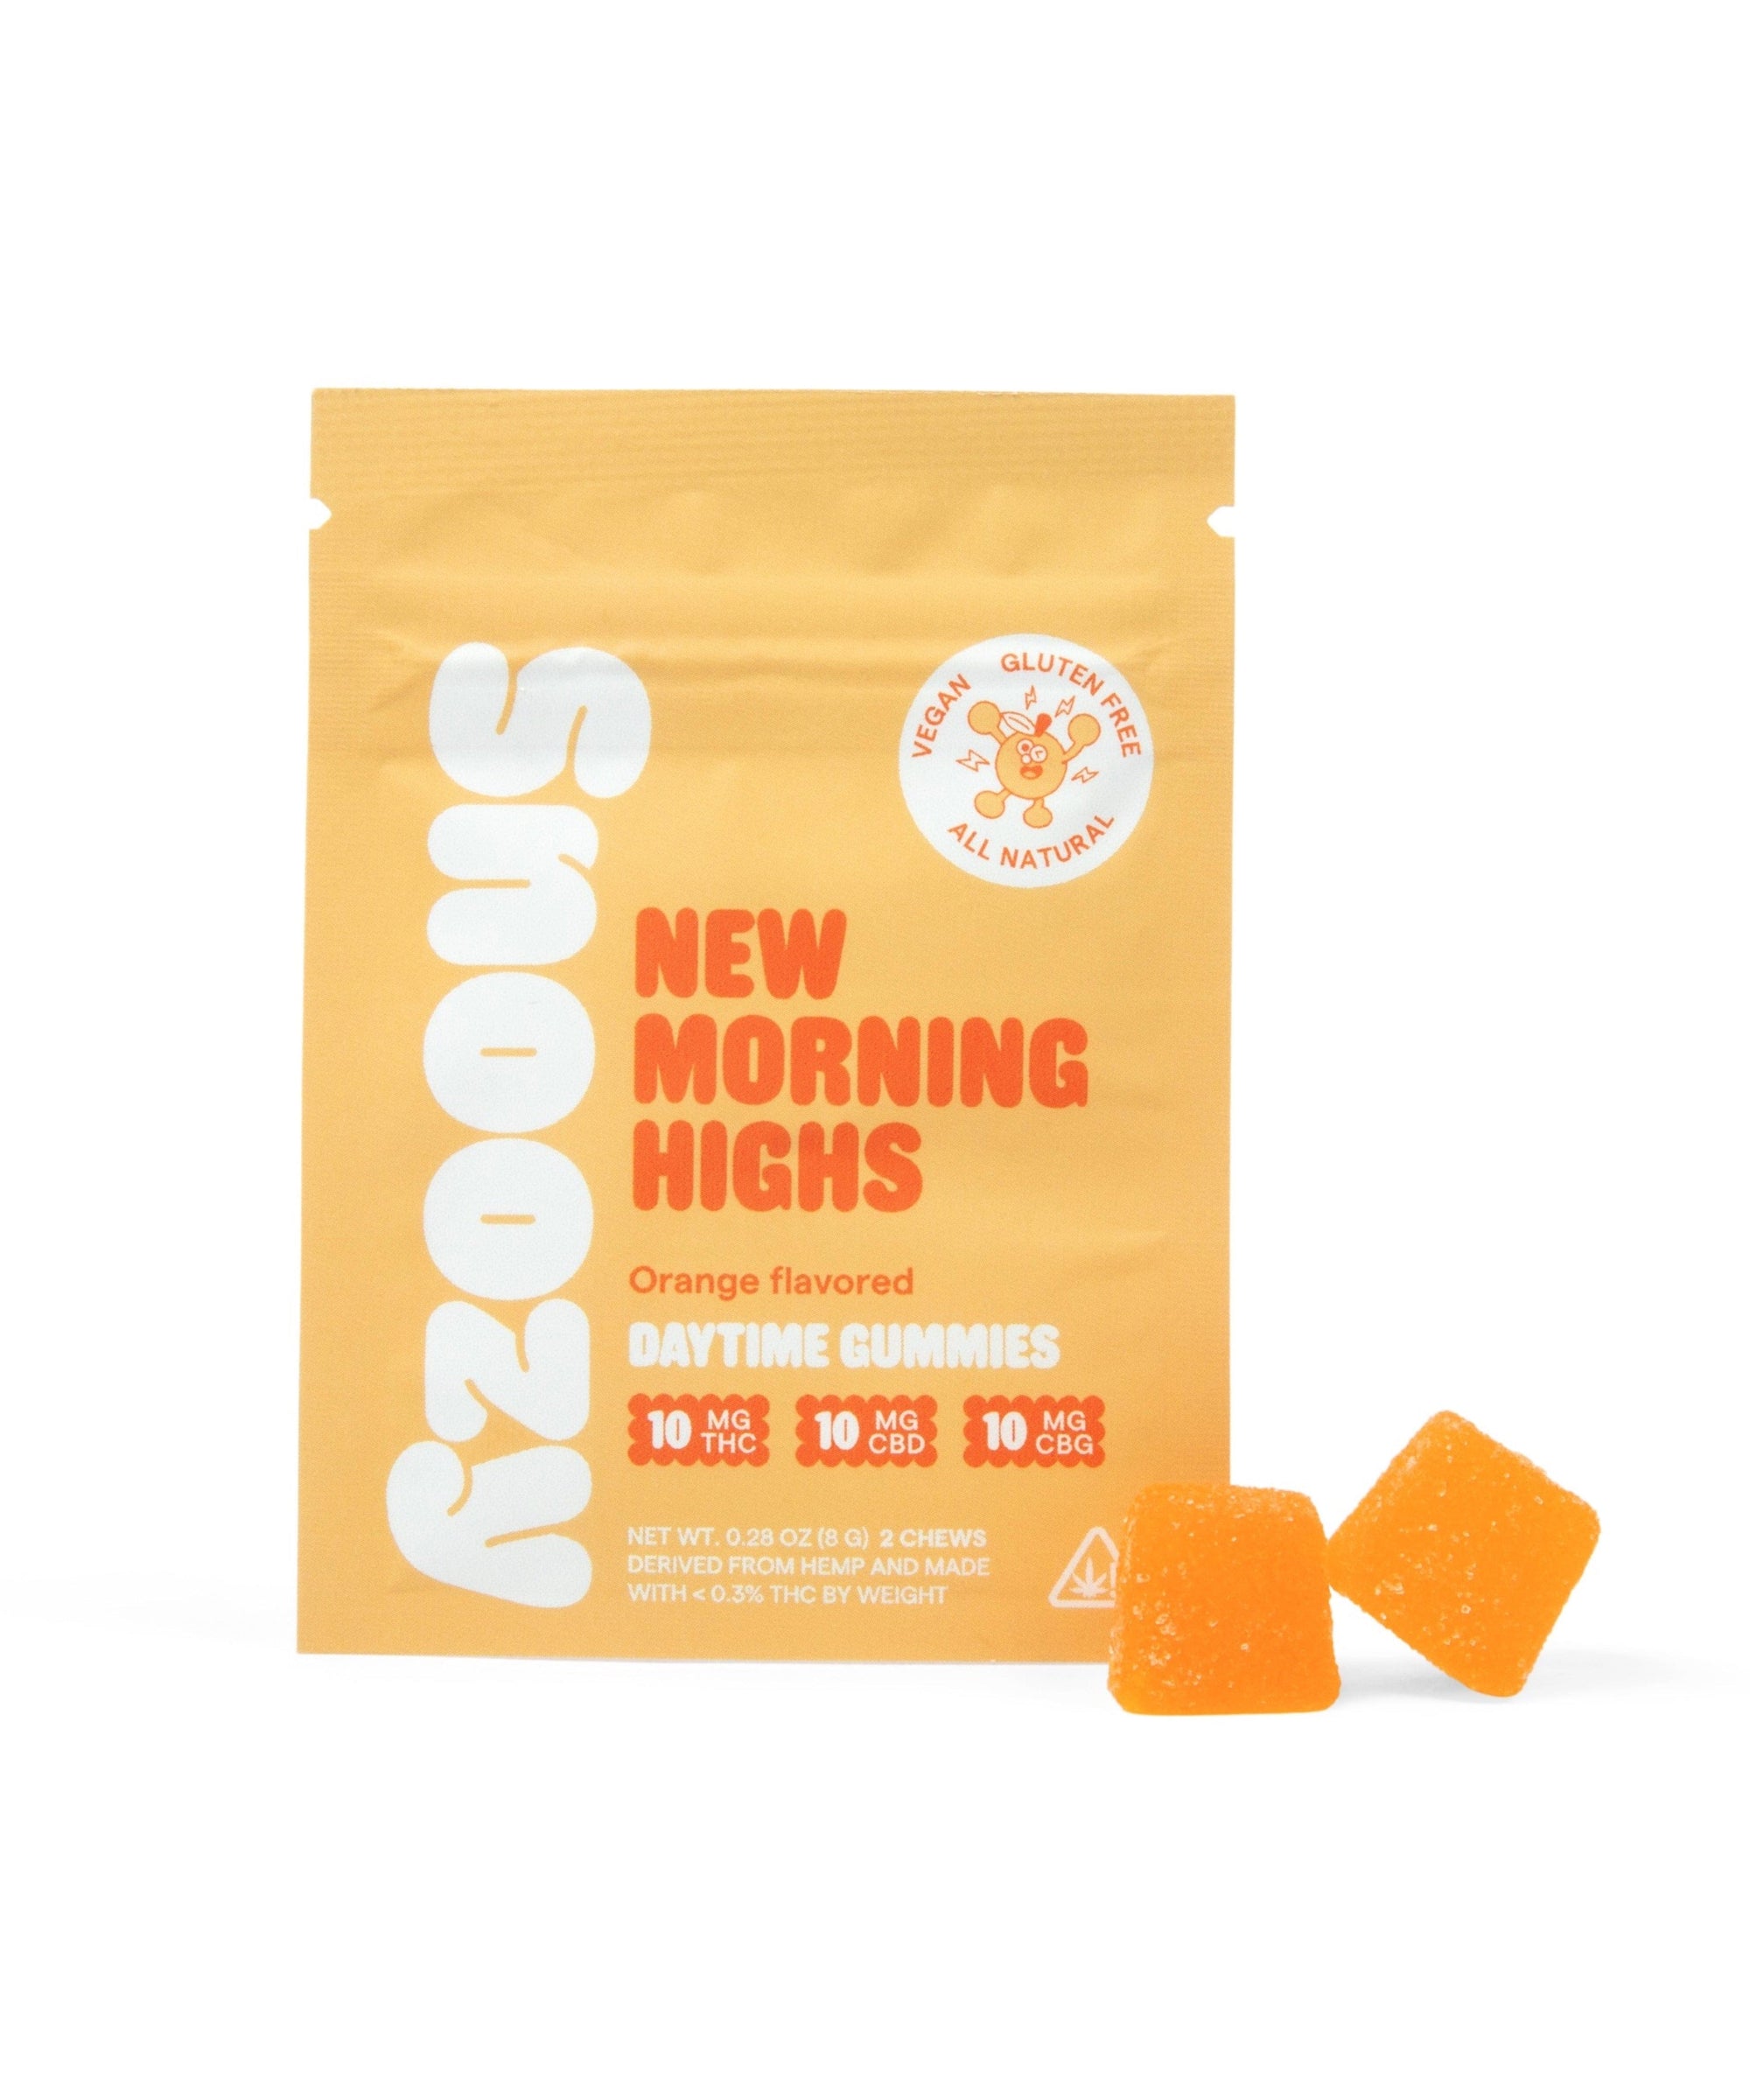 New Morning Highs: Daytime Gummies (2 Pack)